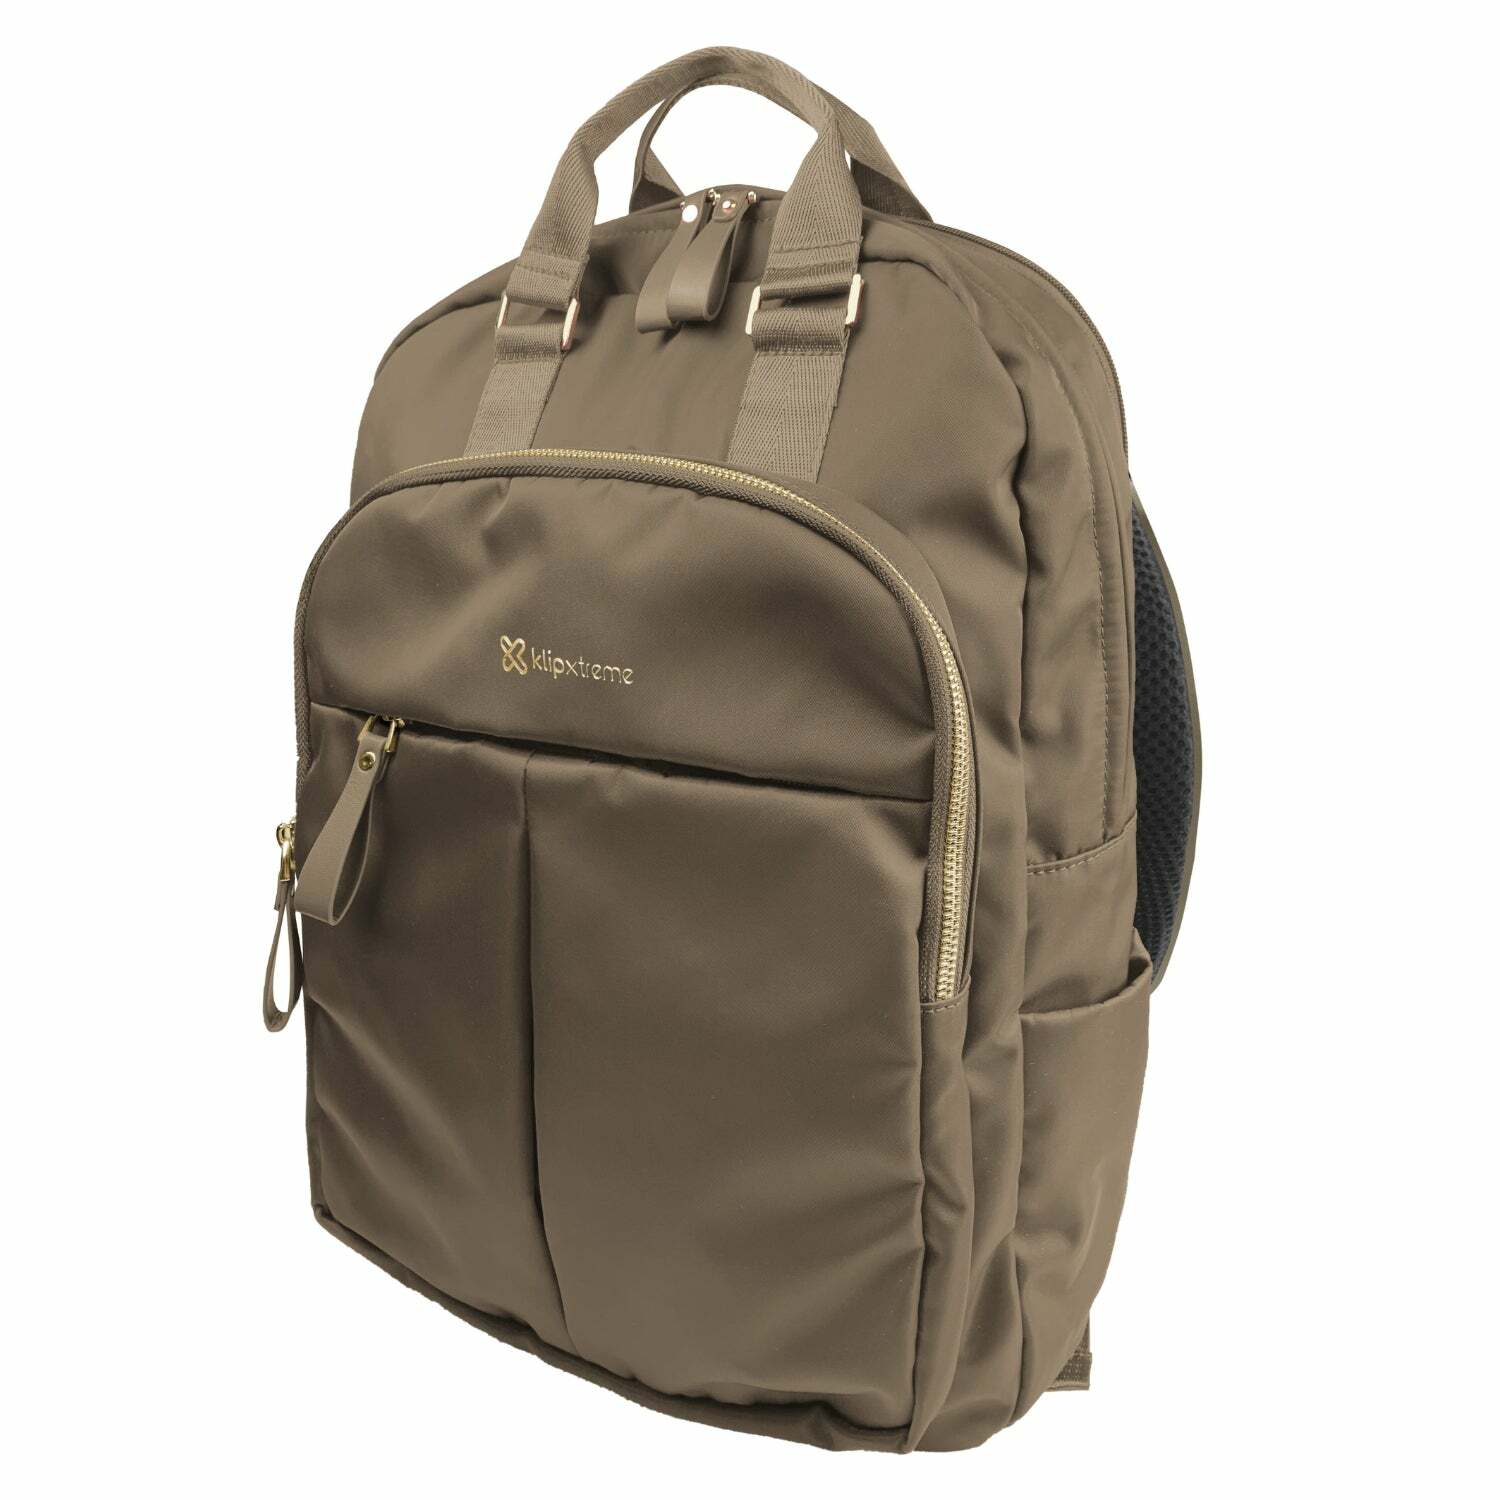 Klip Xtreme - Toscana KNB-468 Laptop Backpack, Brown